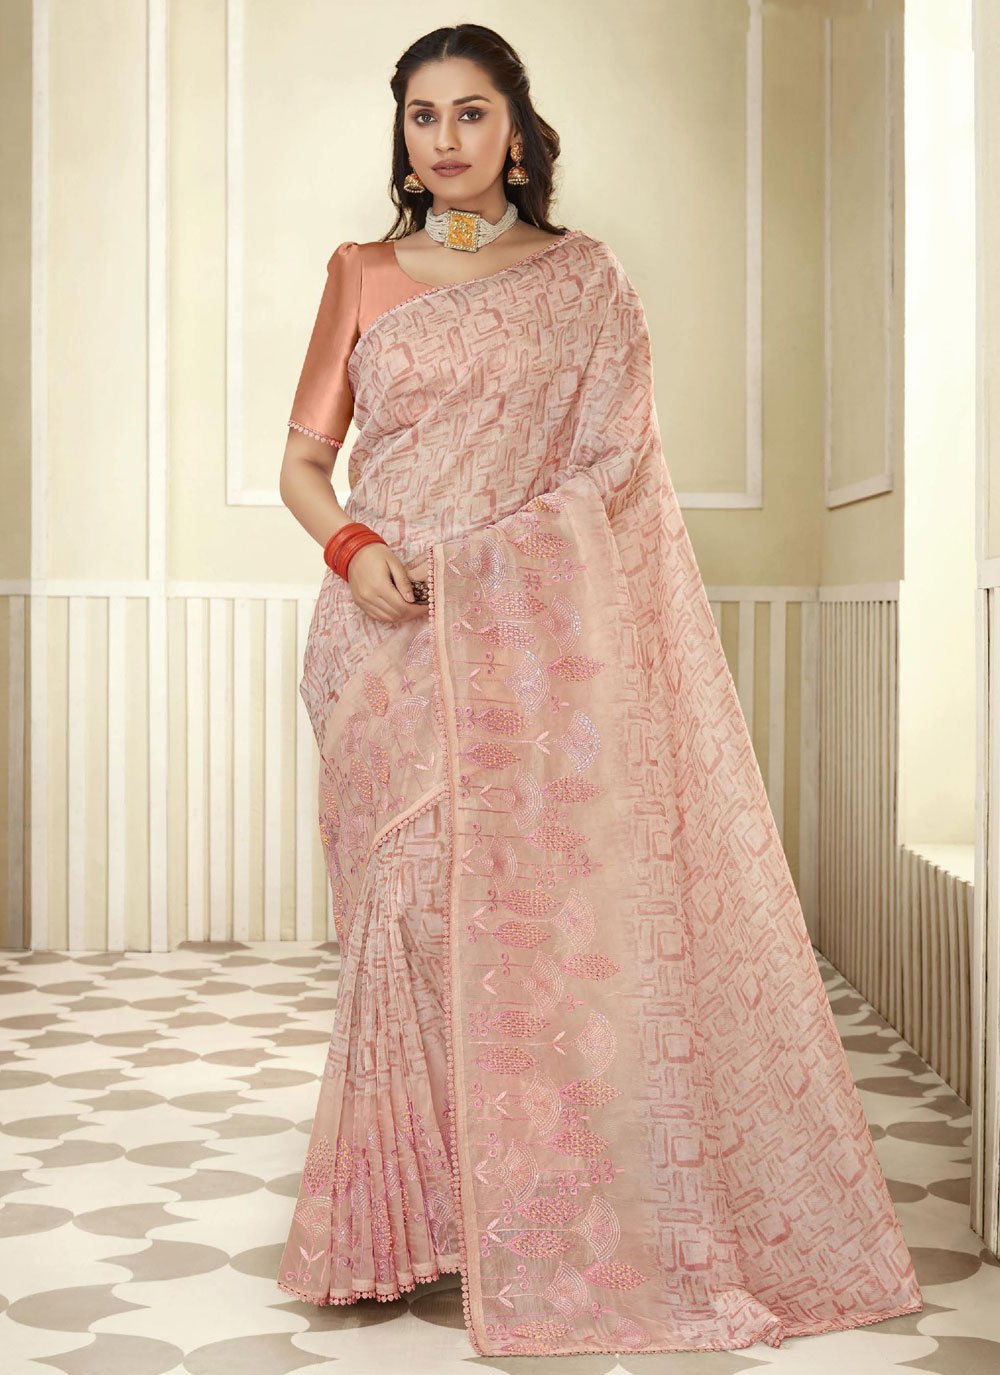 Kajol Give Fashion Goals In A Beautiful Light Peach Saree - Boldsky.com